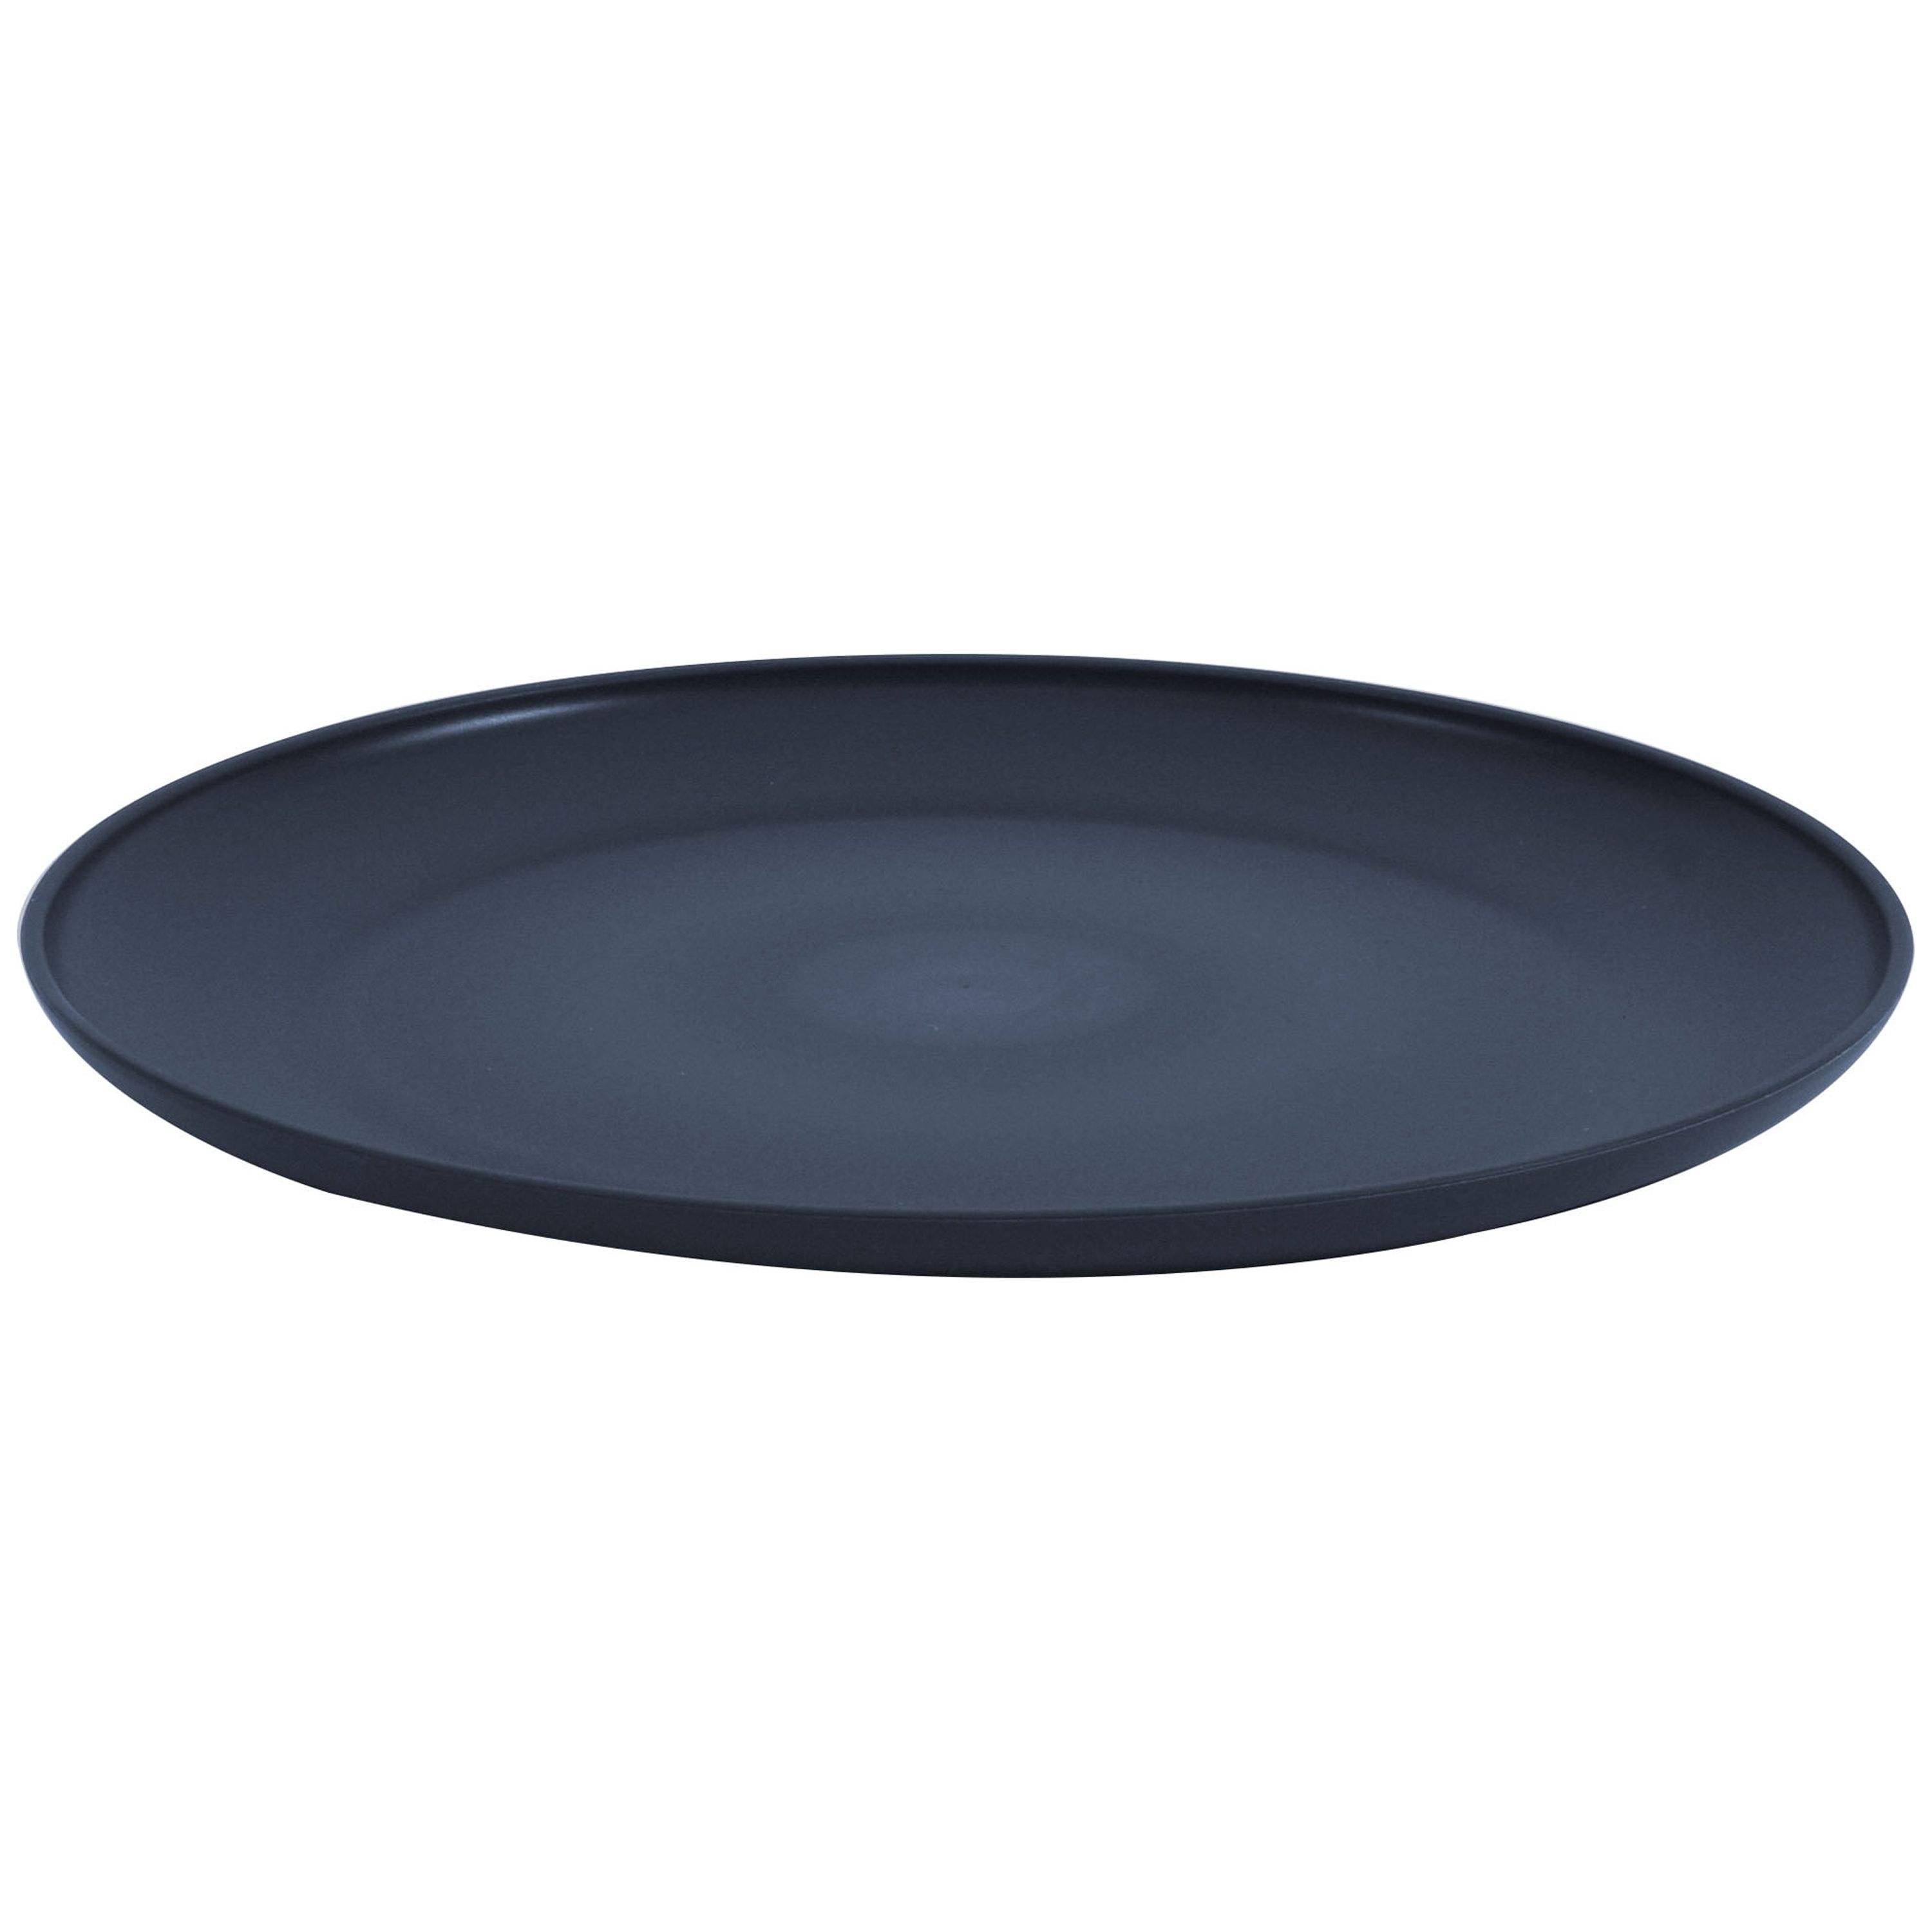 Mainstays - Dark Blue Round Plastic Plate, 10.5 inch - image 4 of 4